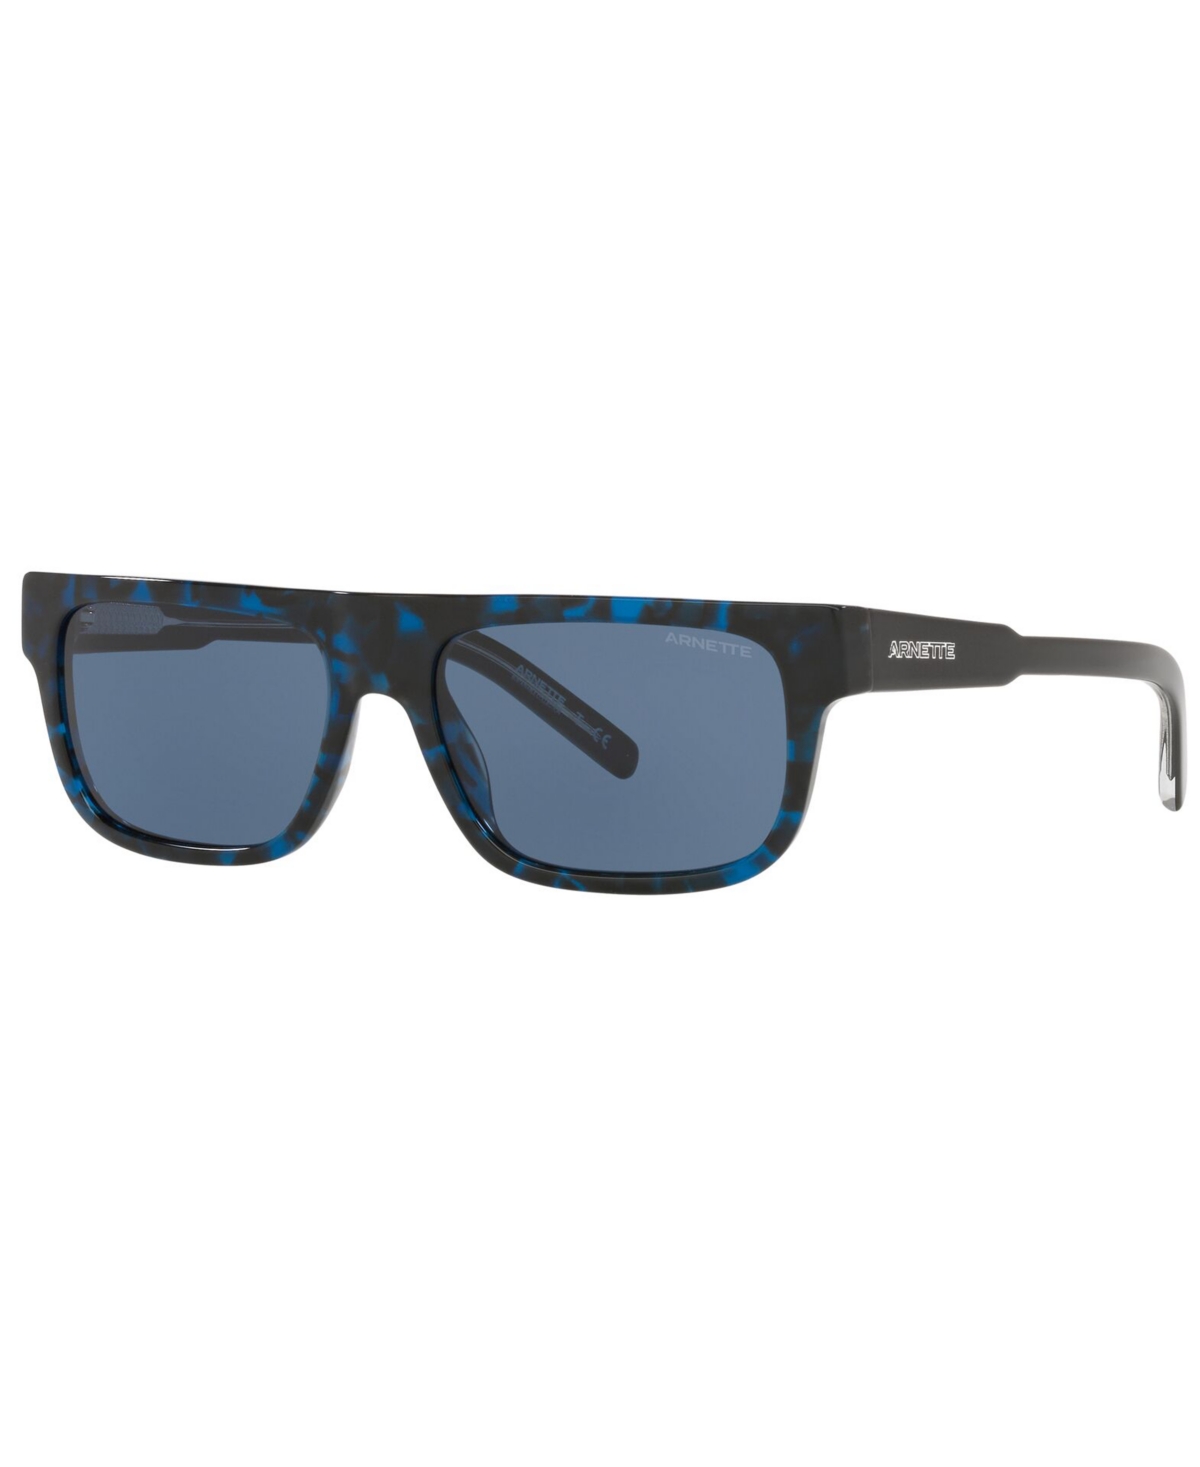 Sunglasses, AN4278 55 - HAVANA/DARK BLUE